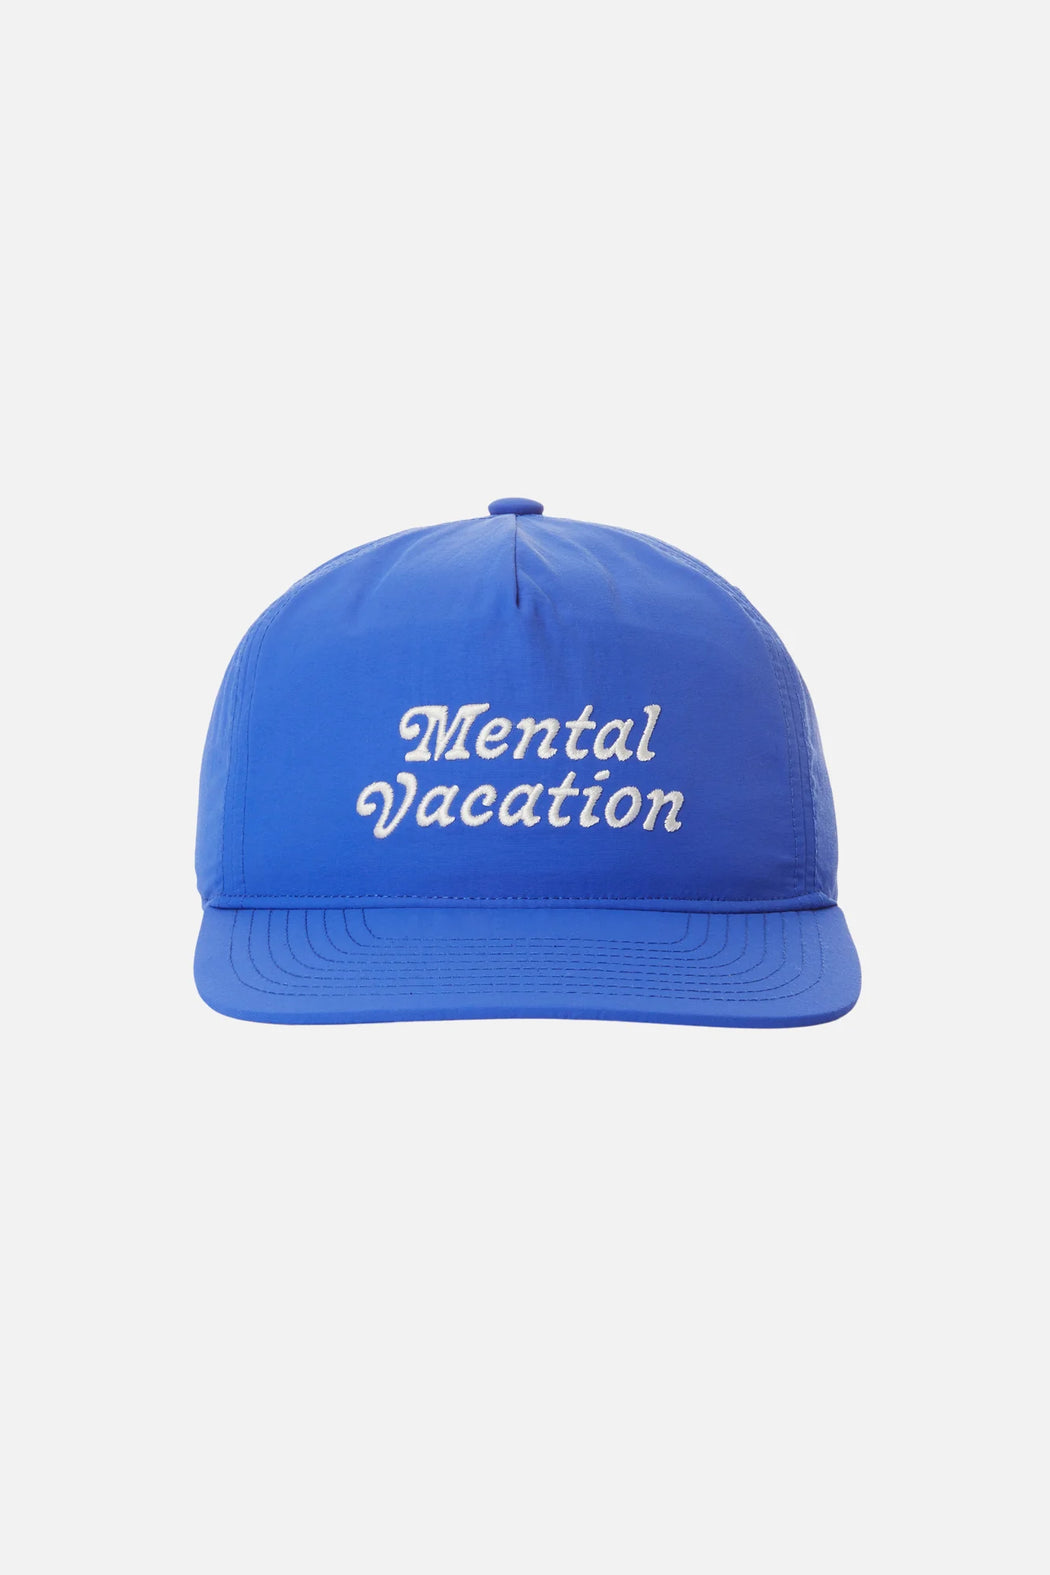 Mental Vacation Hat | Bay Blue